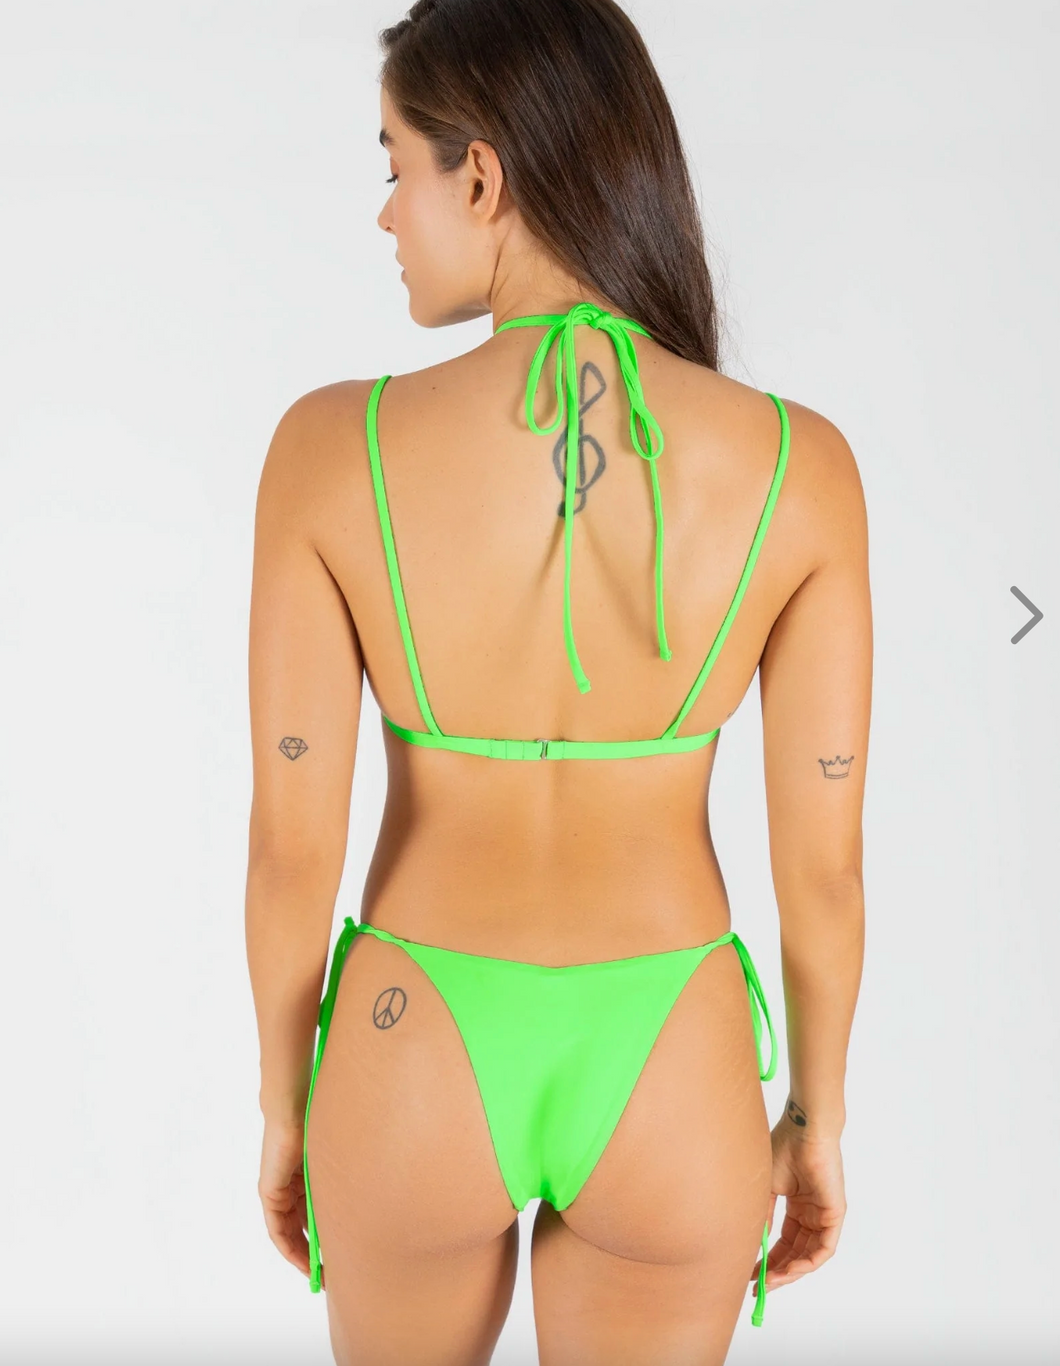 OneOne Swimwear 'Ariel' Skimpy Bikini Bottom in Neon Green